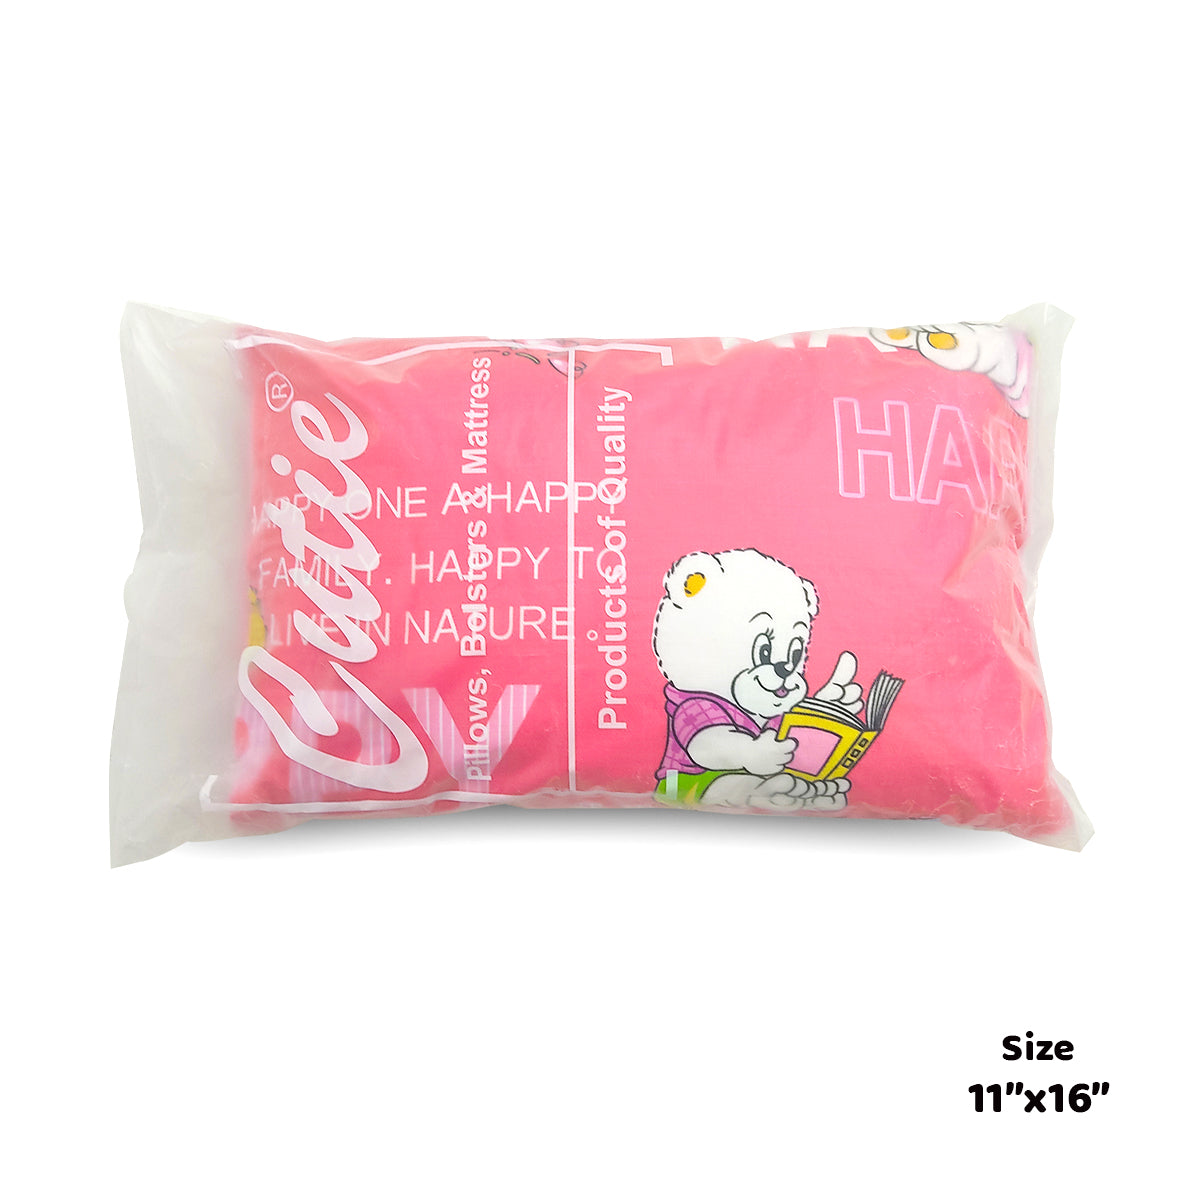 Cutie Baby - Pillow (11"x 16")